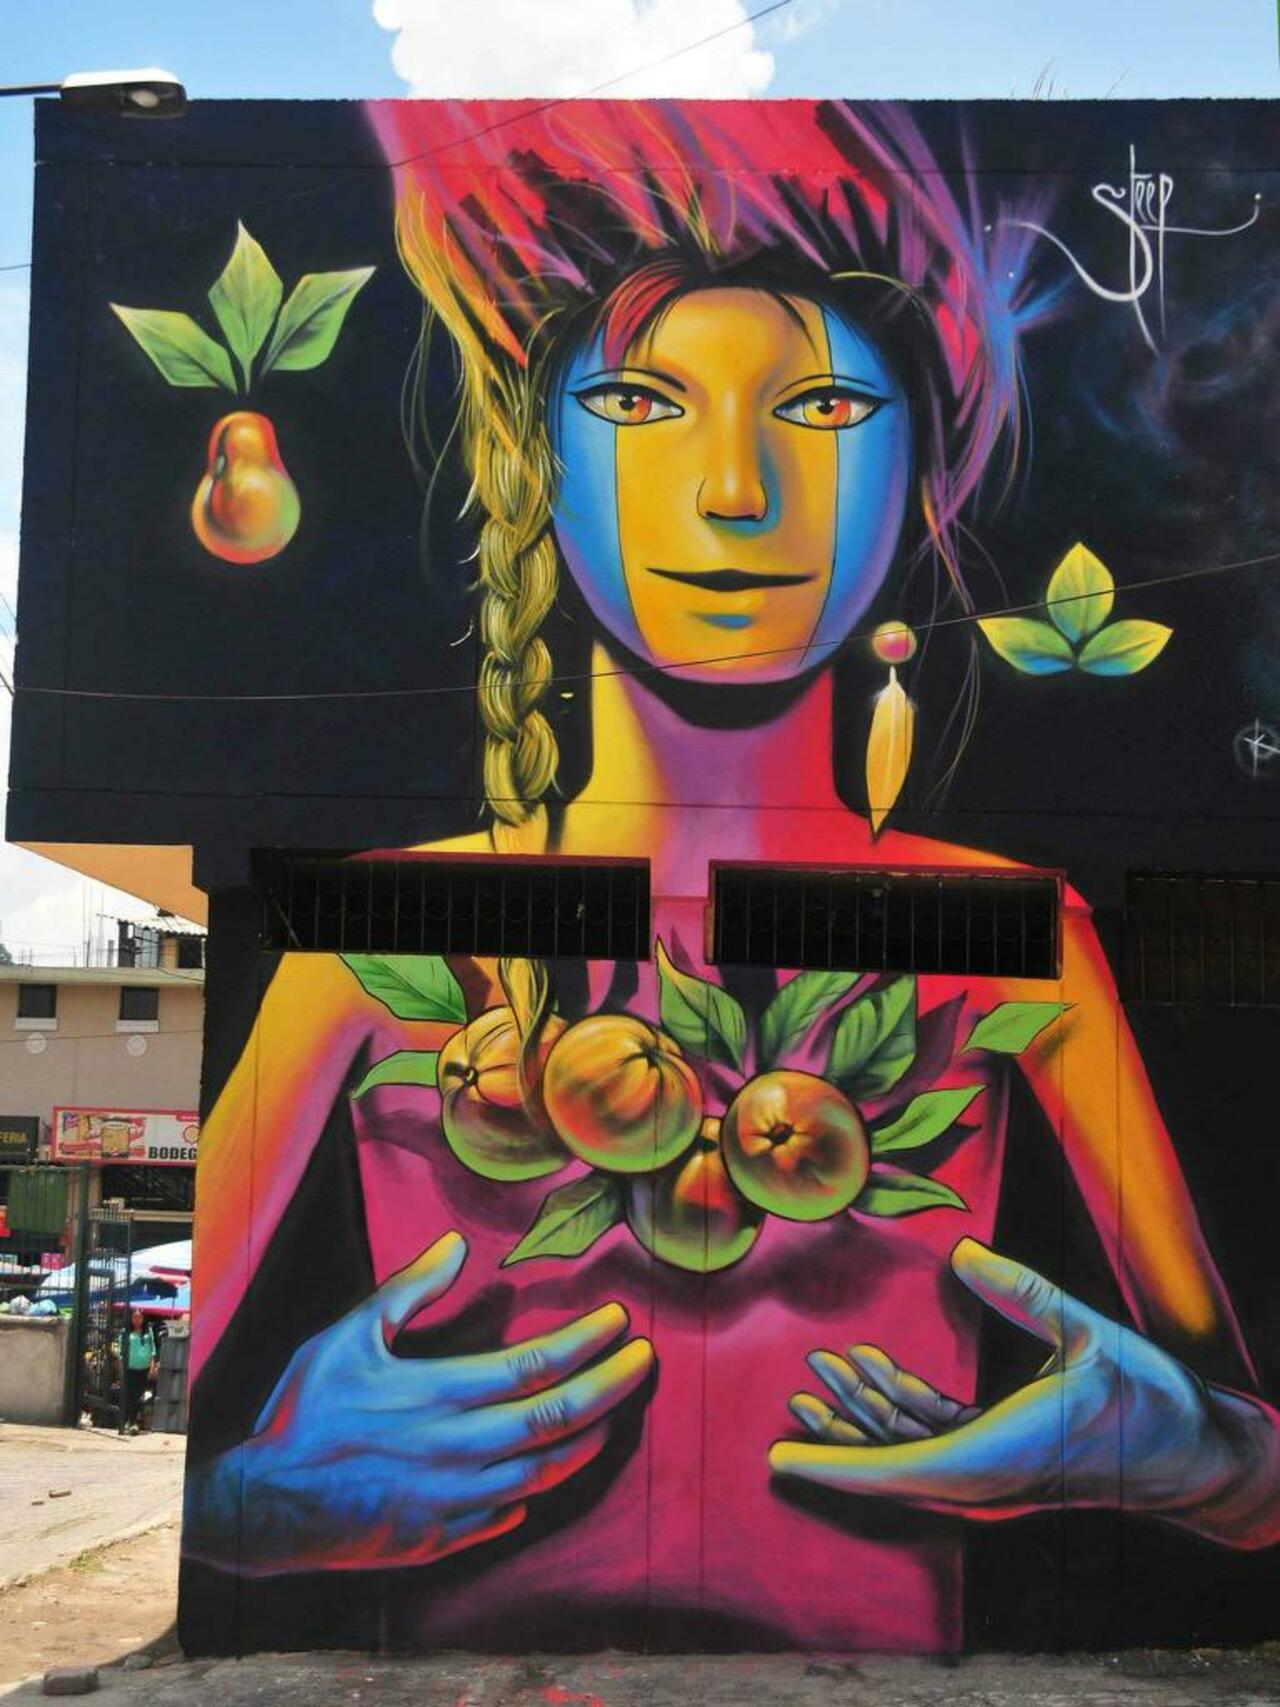 Street Art by Steep #art #graffiti #mural #streetart http://t.co/dKGIfl0HiR http://twitter.com/GoogleStreetArt/status/652717552435638272/photo/1/large?utm_source=fb&utm_medium=fb&utm_campaign=charlesjackso14&utm_content=652720469402103808 … … … http://twitter.com/GoogleStreetArt/status/652717552435638272/photo/1/large?utm_source=fb&utm_medium=fb&utm_campaign=charlesjackso14&utm_content=652728477674799104